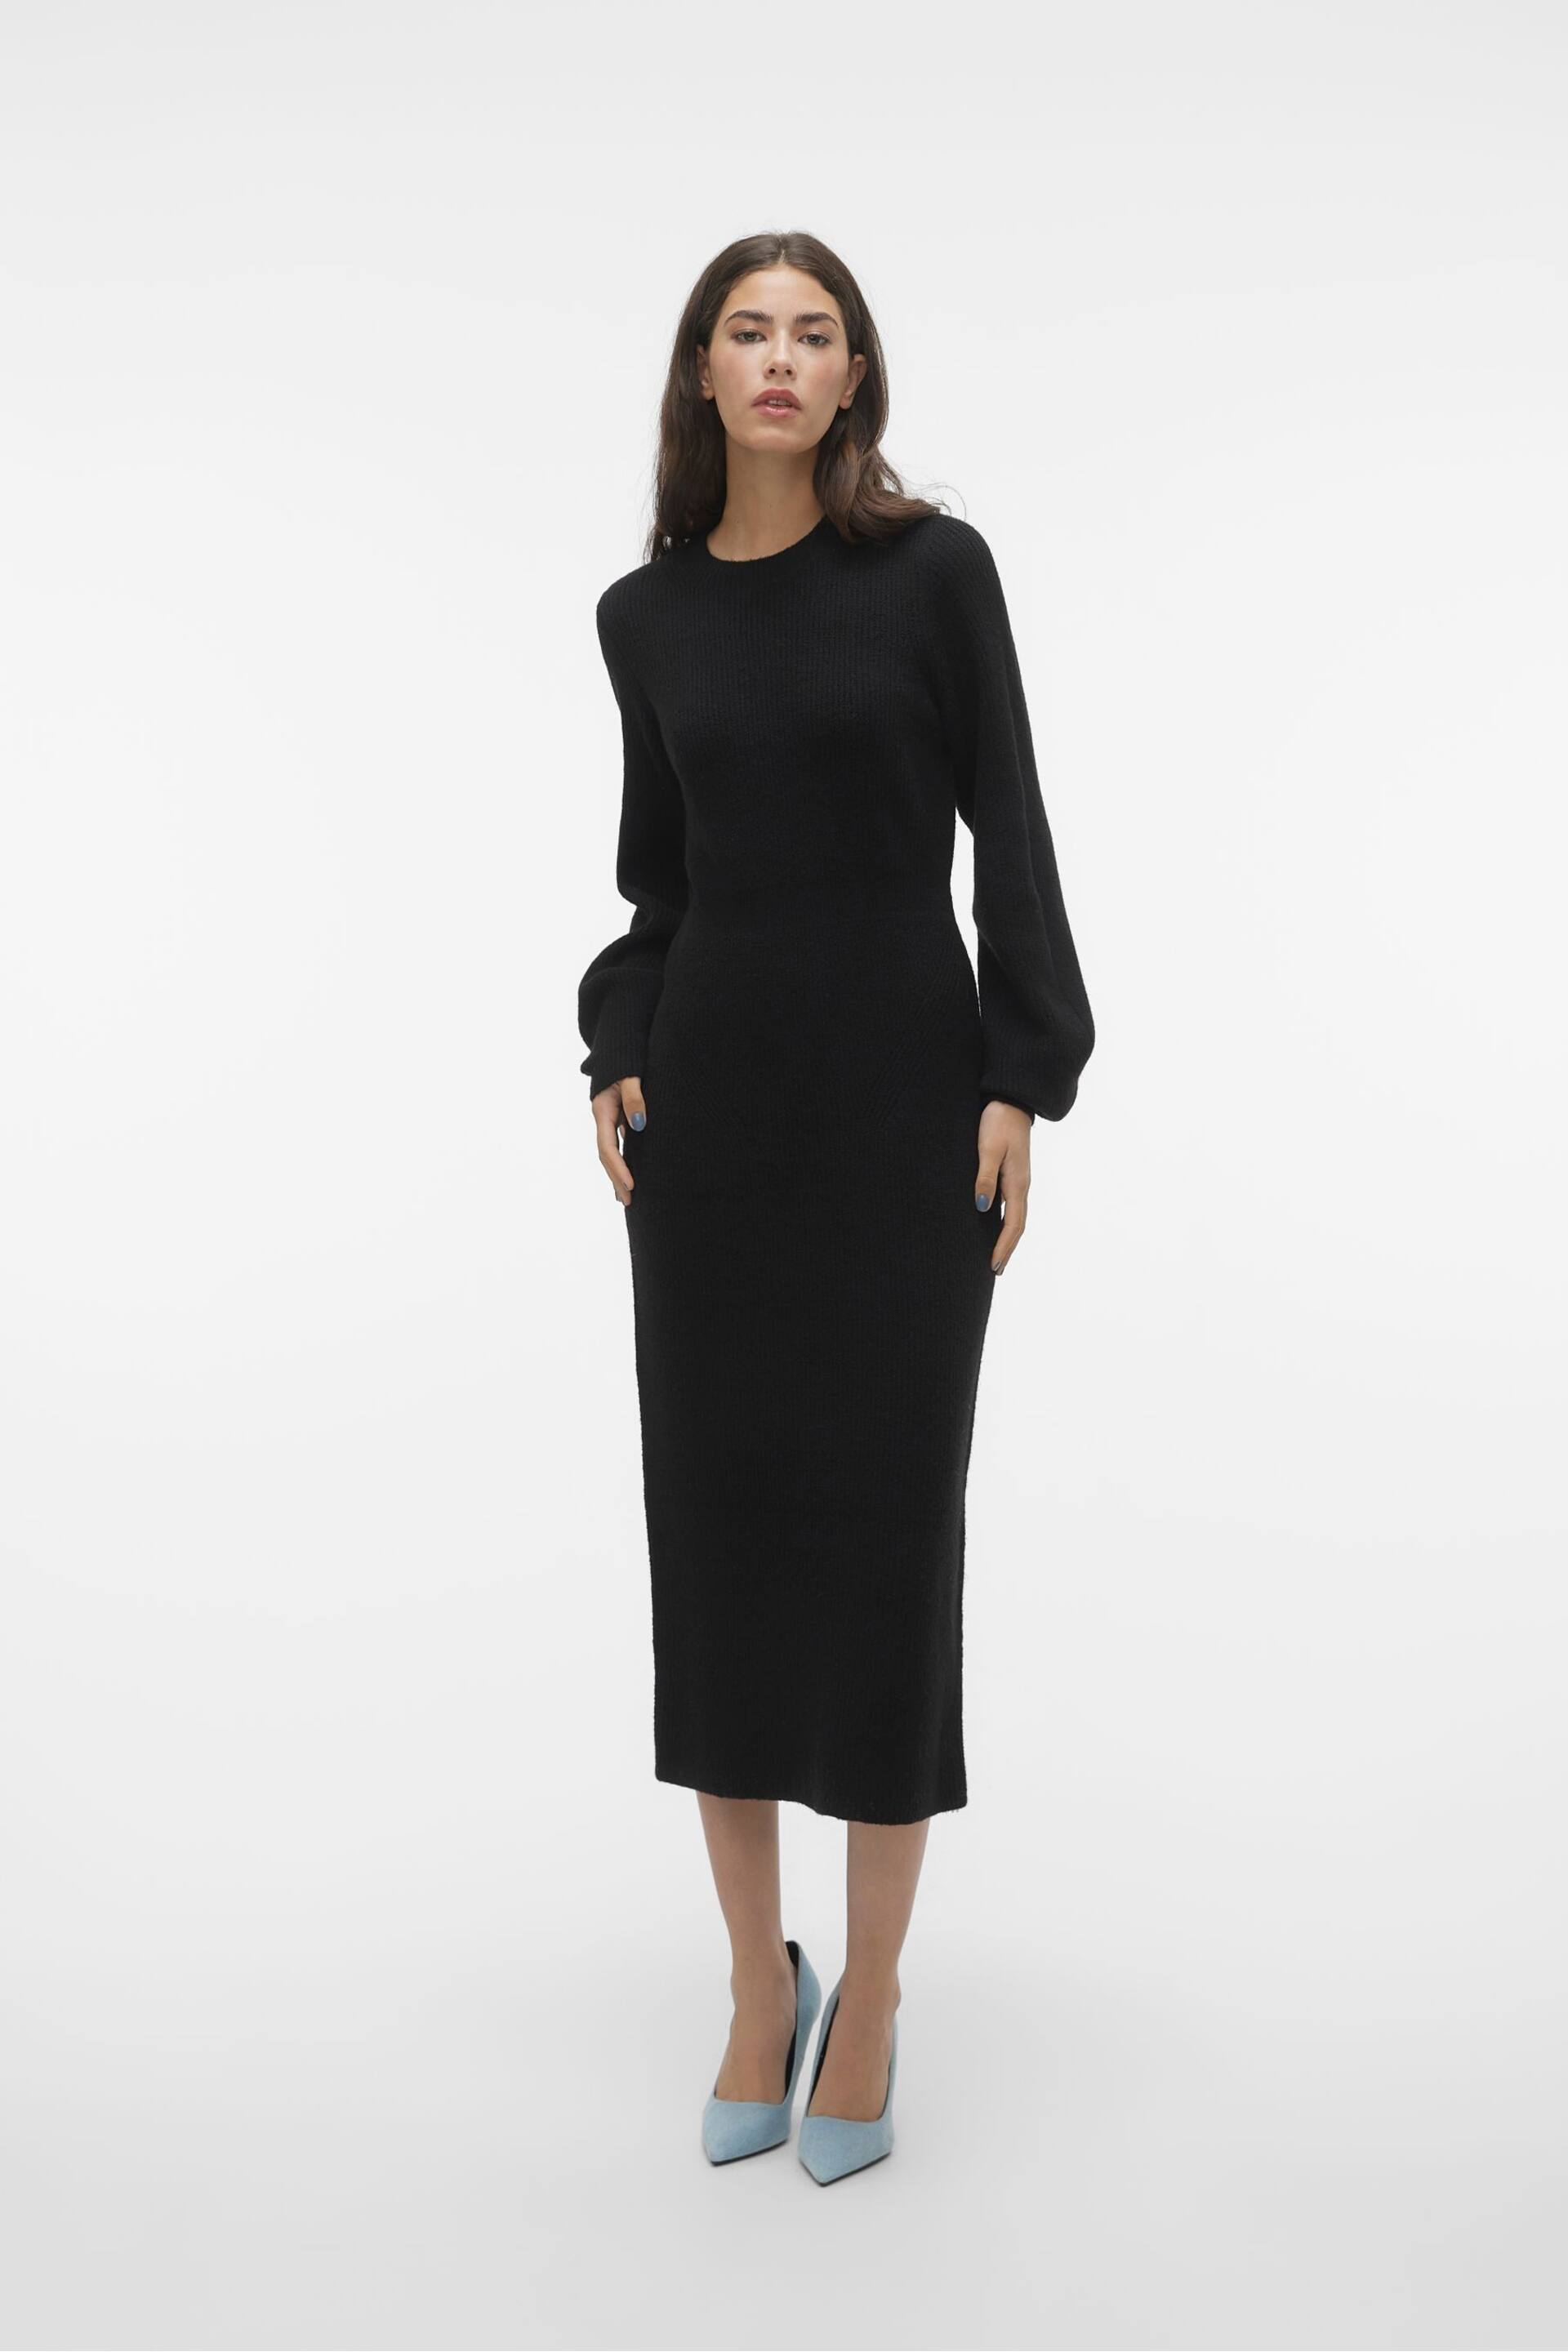 VERO MODA Black Waisted Long Sleeve Midi Knitted Jumper Dress - Image 3 of 5